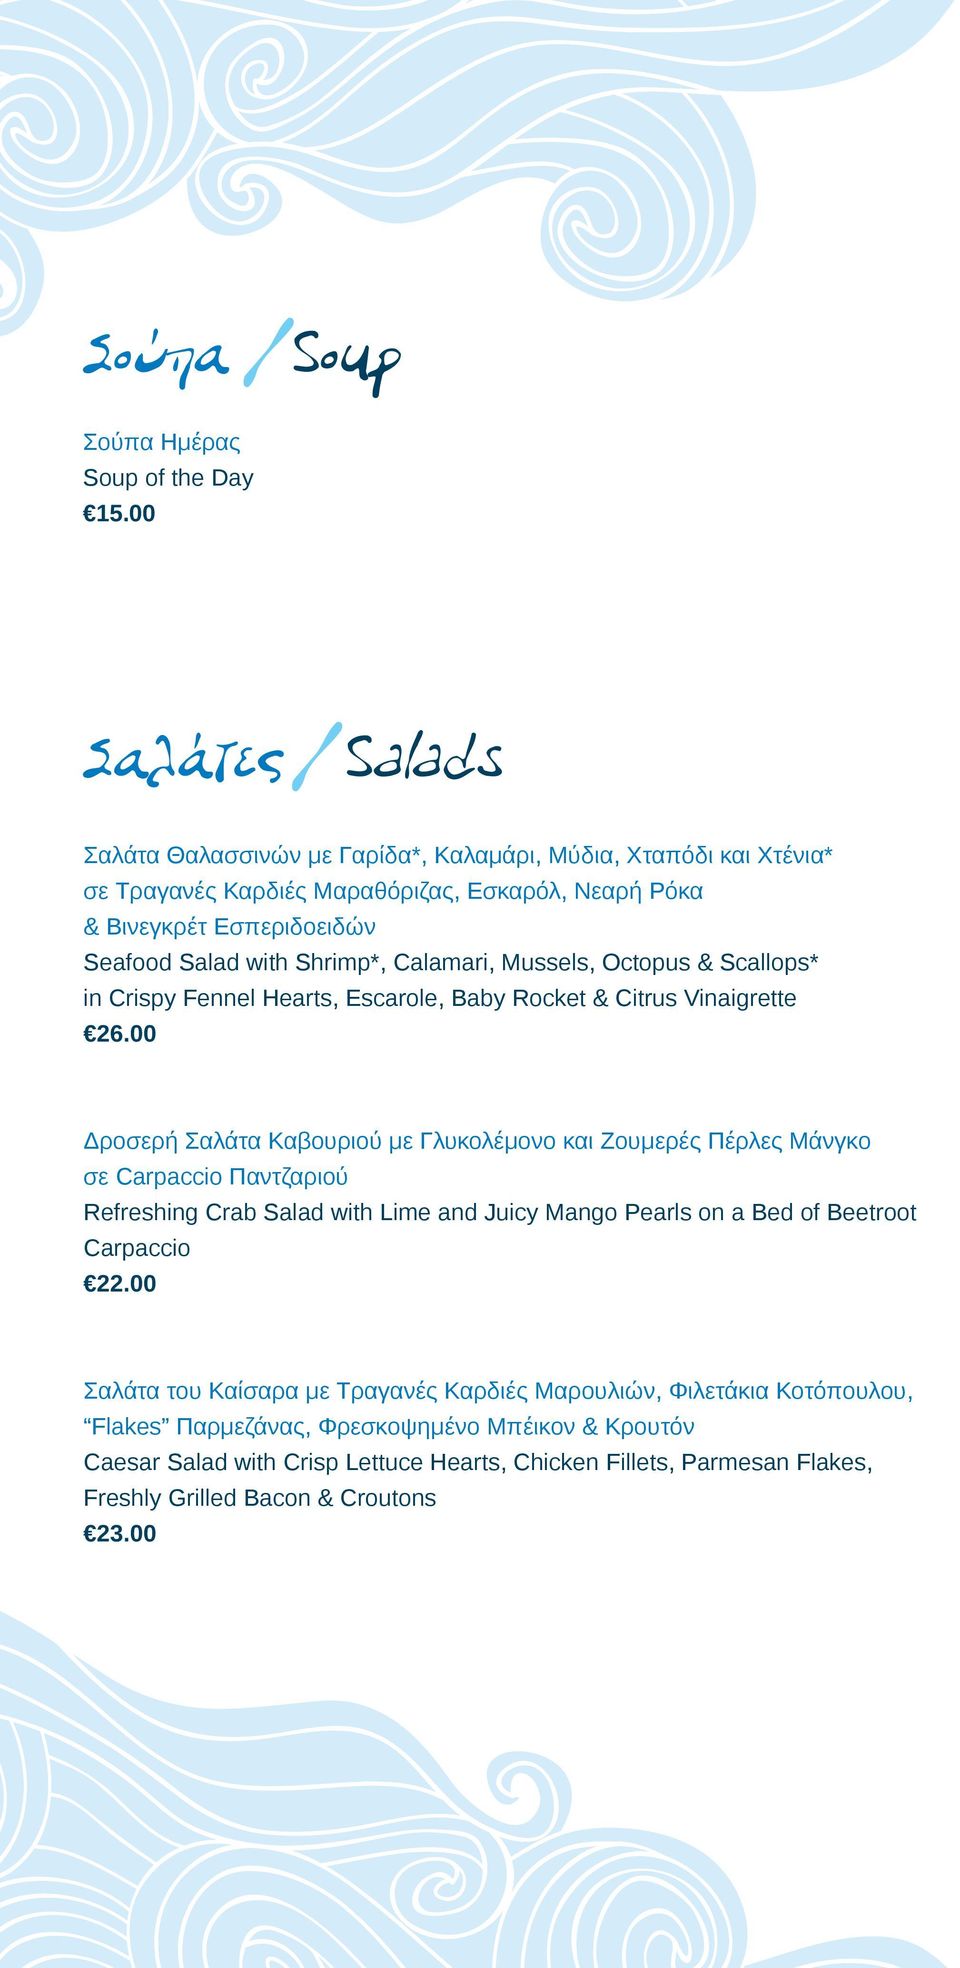 Shrimp*, Calamari, Mussels, Octopus & Scallops* in Crispy Fennel Hearts, Escarole, Baby Rocket & Citrus Vinaigrette 26.